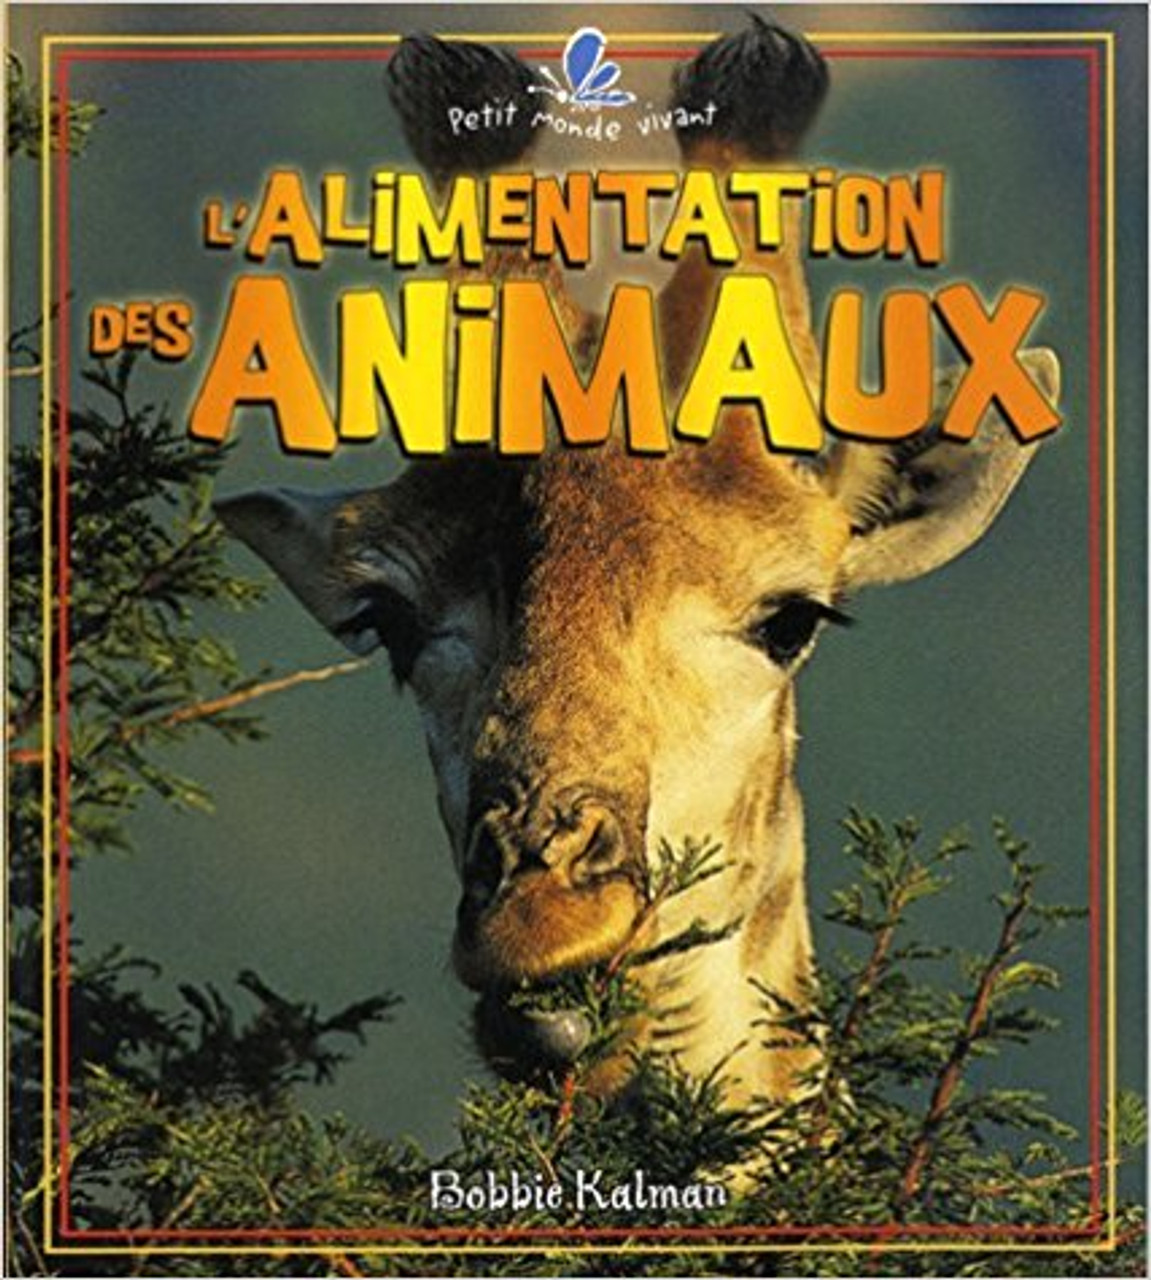 L'Alimentation des Animaux by Bobbie Kalman